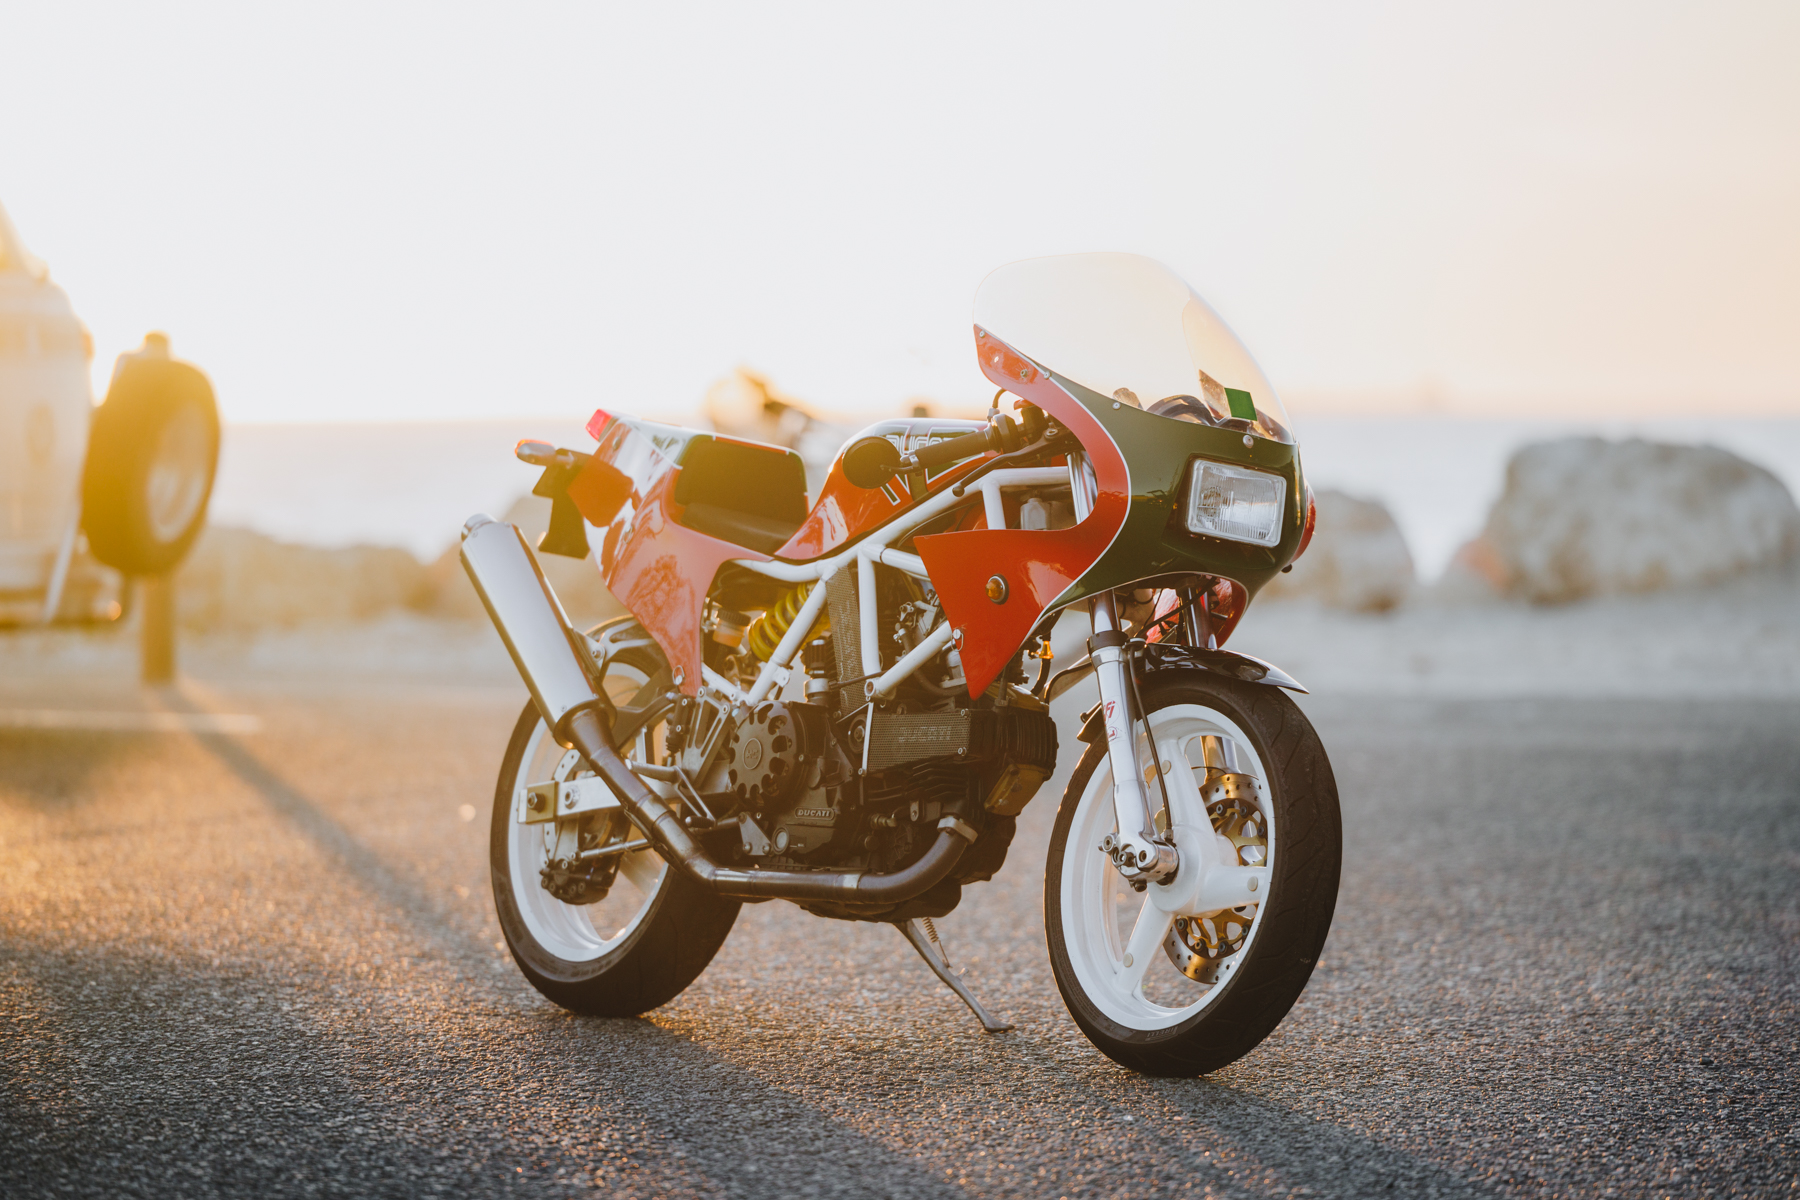 Landscape photo of a custom Ducati motorcycle